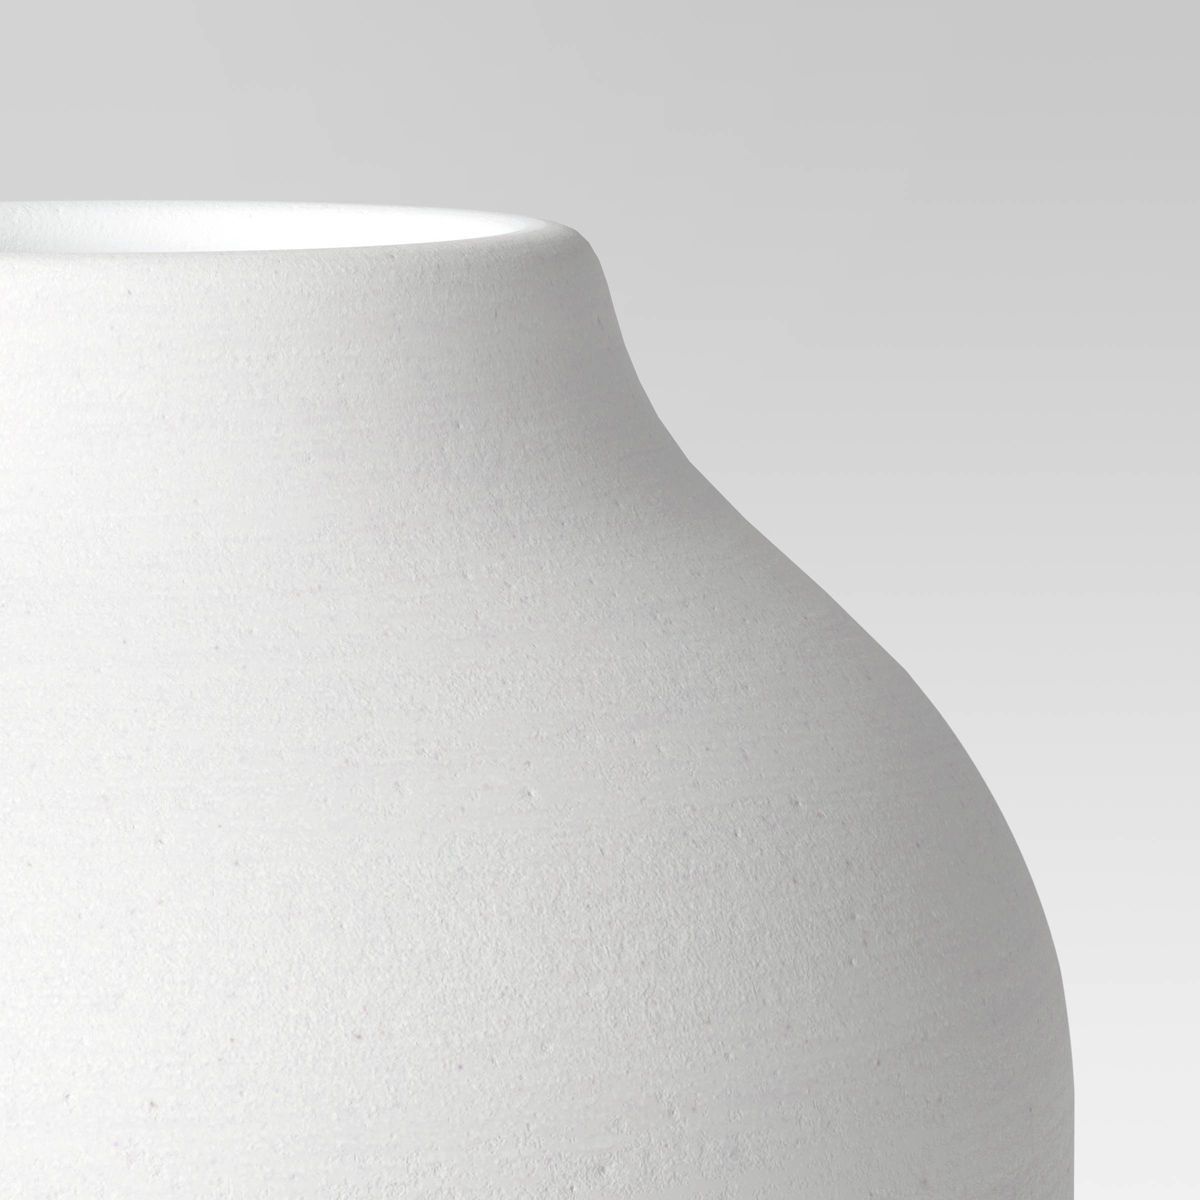 Textured Ceramic Vase White - Threshold™ | Target